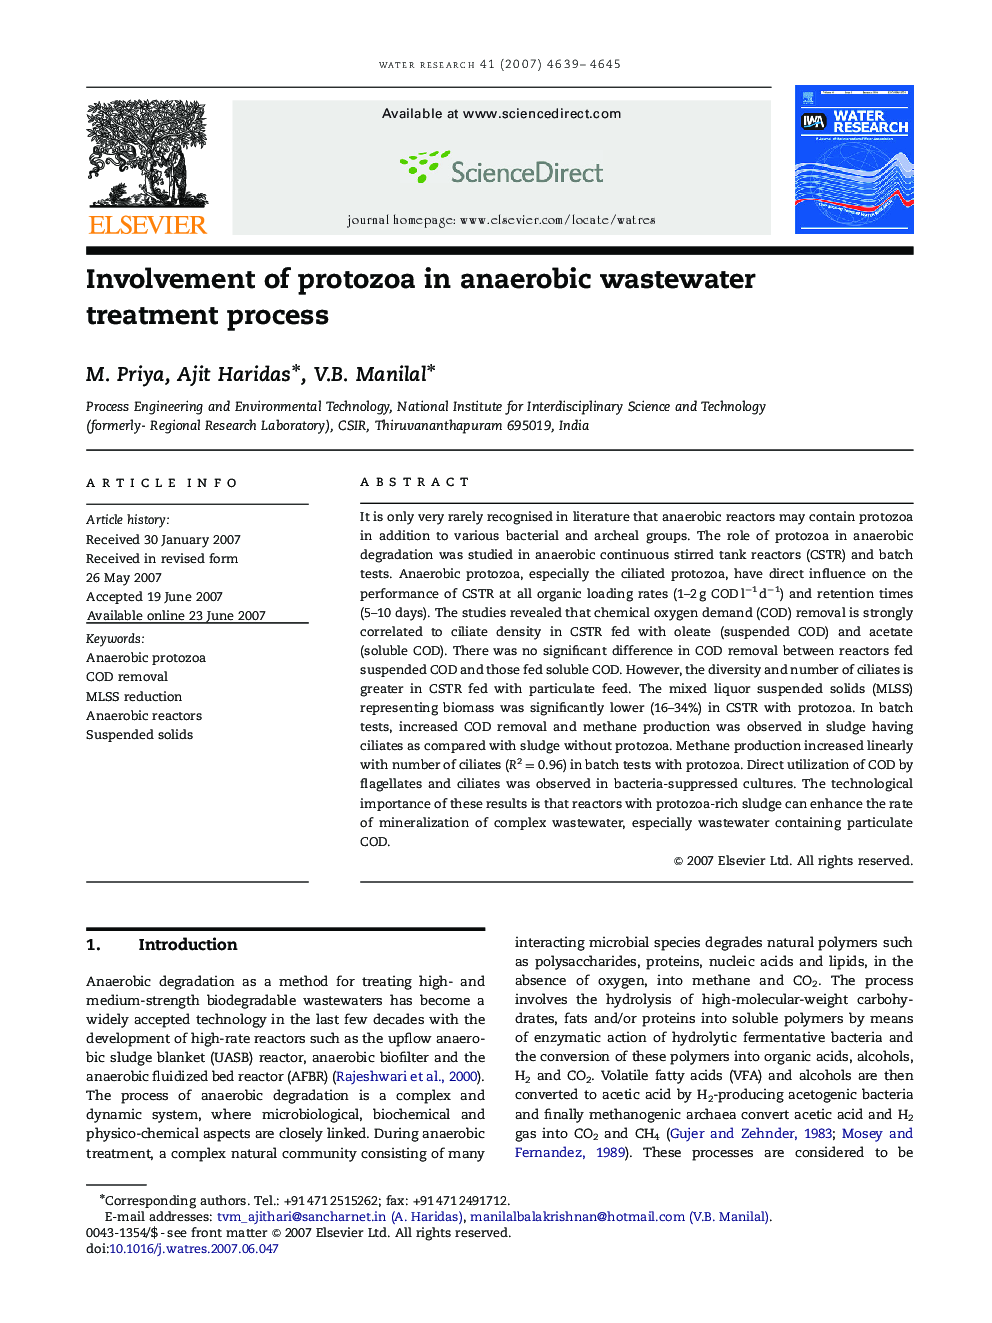 Involvement of protozoa in anaerobic wastewater treatment process